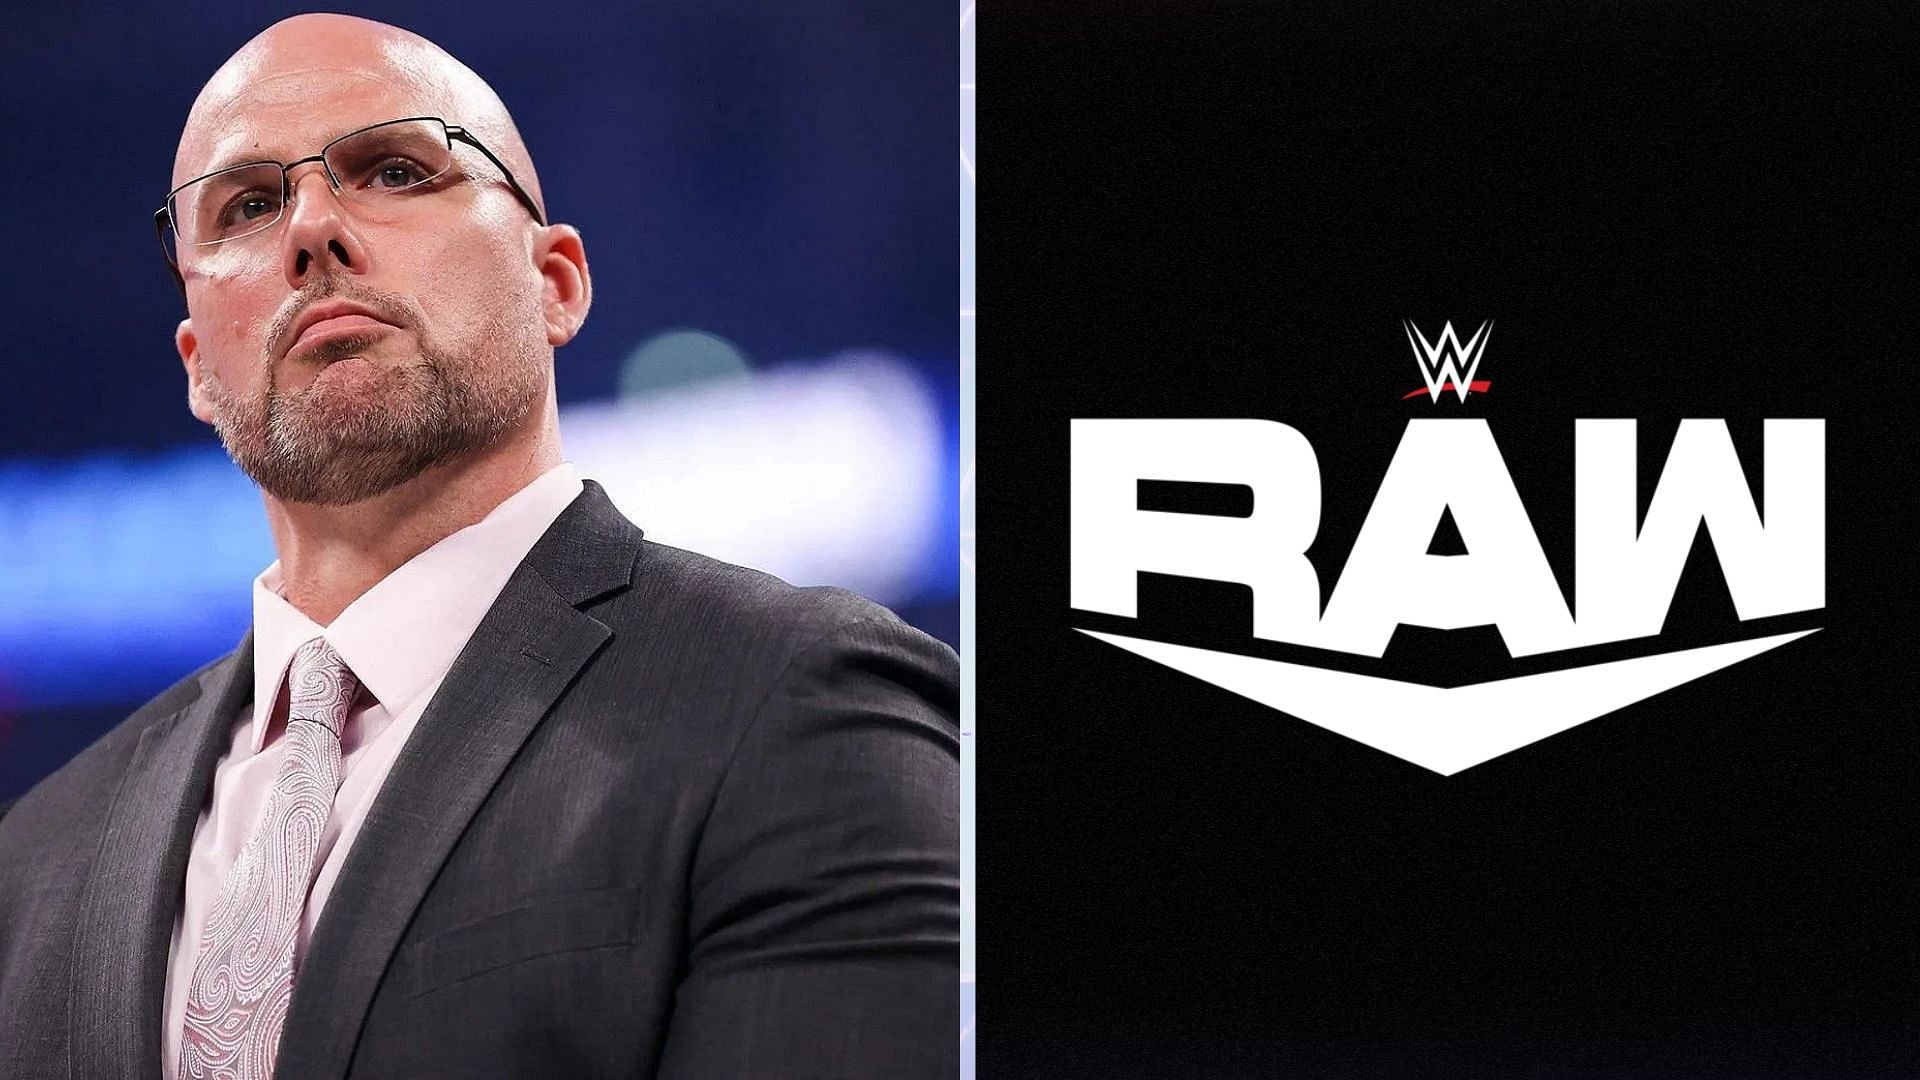 Will Adam Pearce be replaced on WWE RAW? [Image credits: wwe.com]